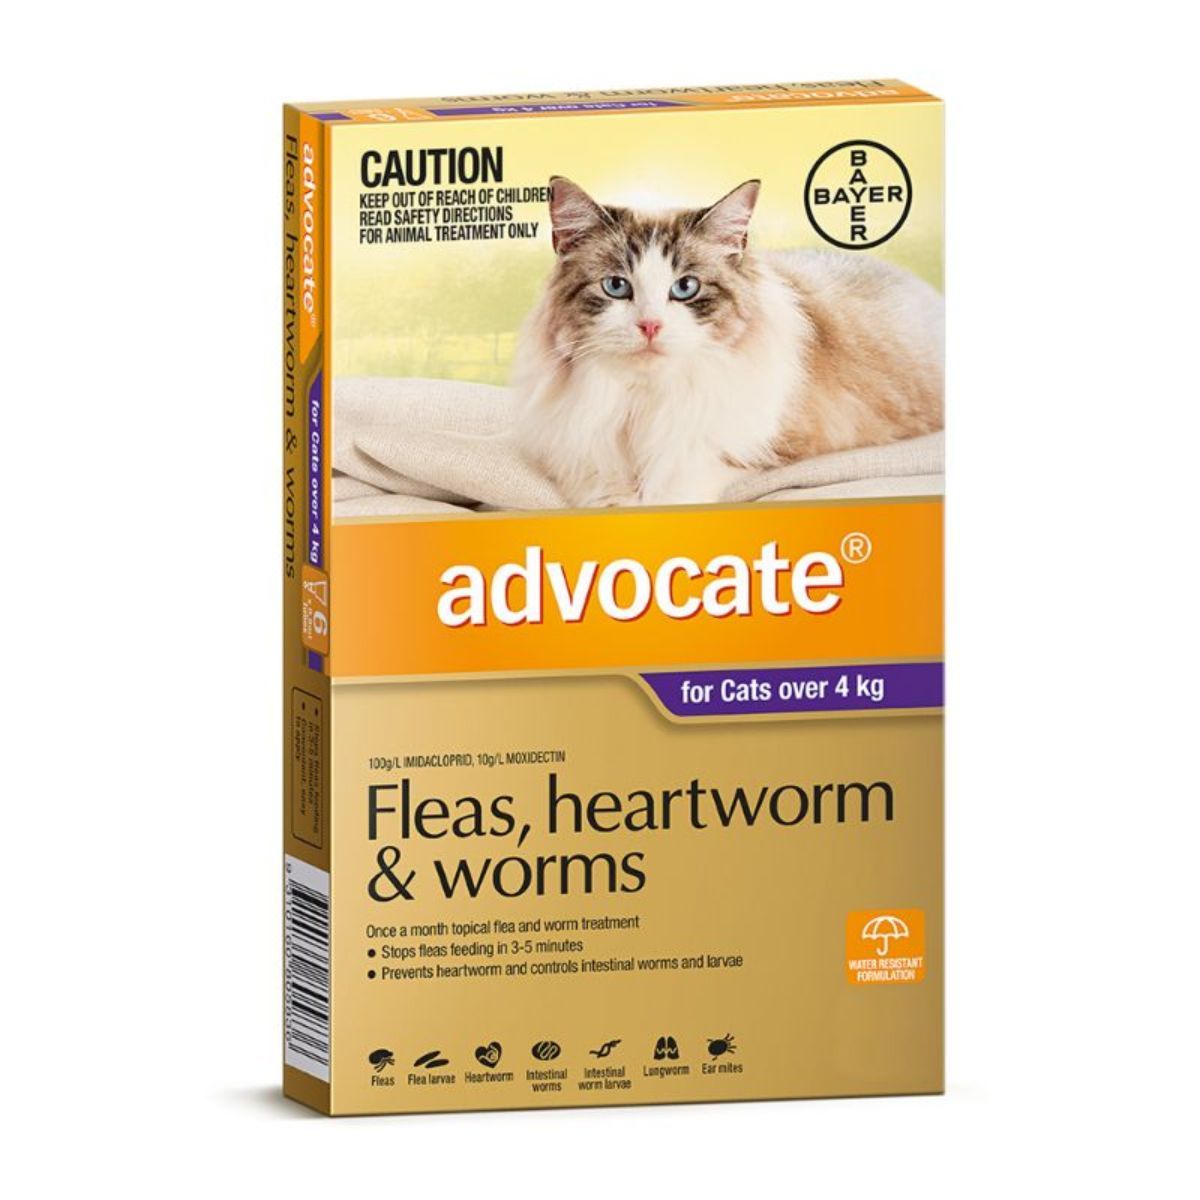 advocate cat flea treatment cat toys, cat boarding Perth, Cat Haven, Perth, cat food, cat products, lost & found cats